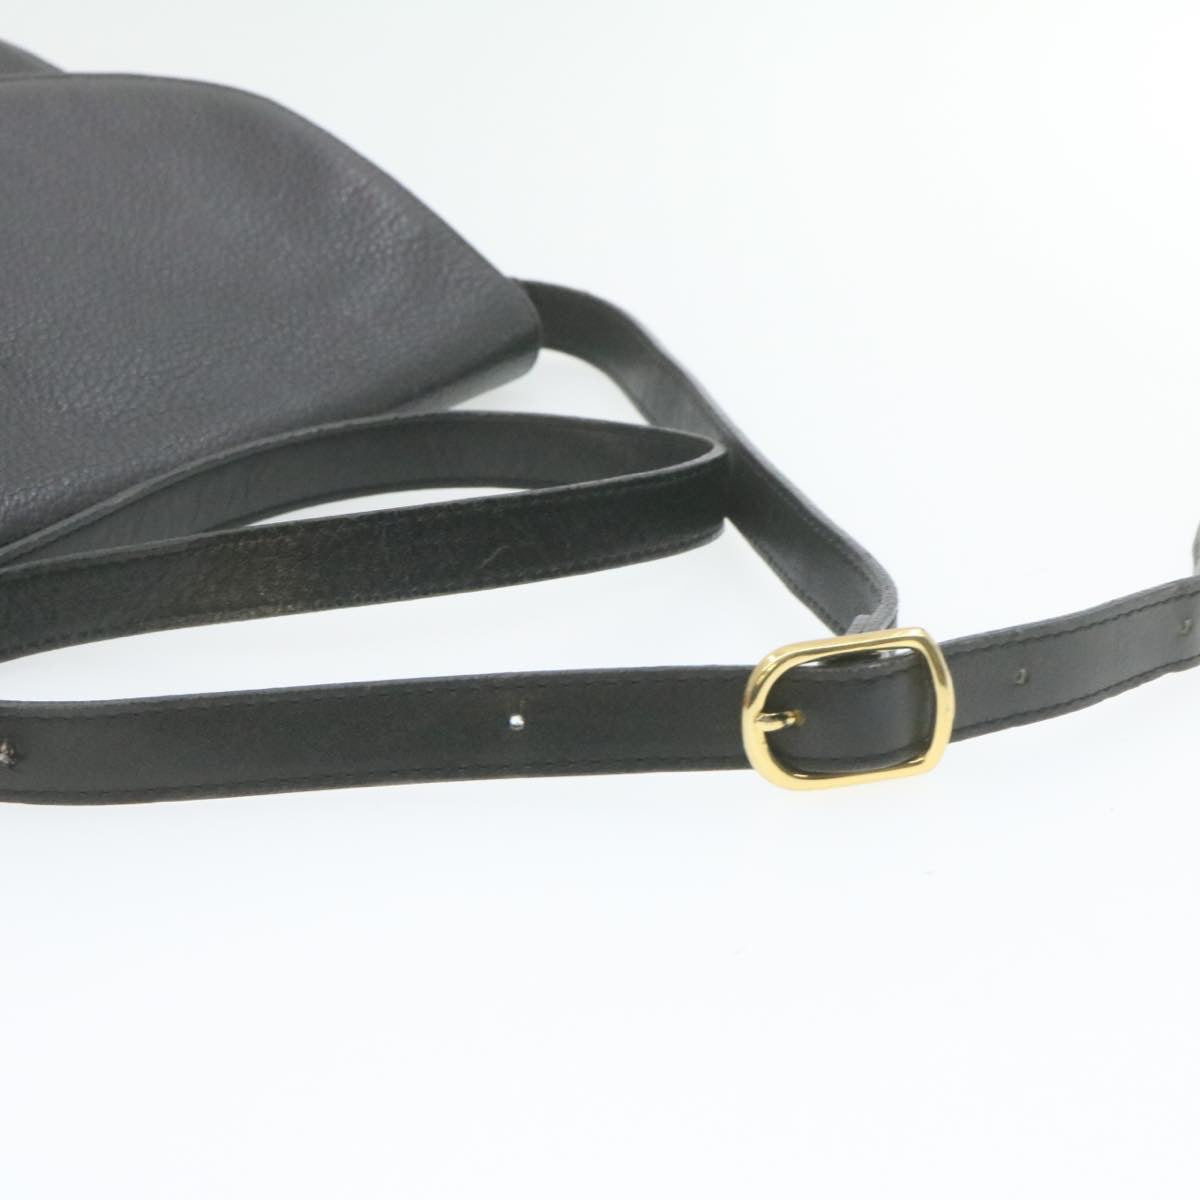 Burberrys Nova Check Shoulder Bag Leather Black Auth am636g